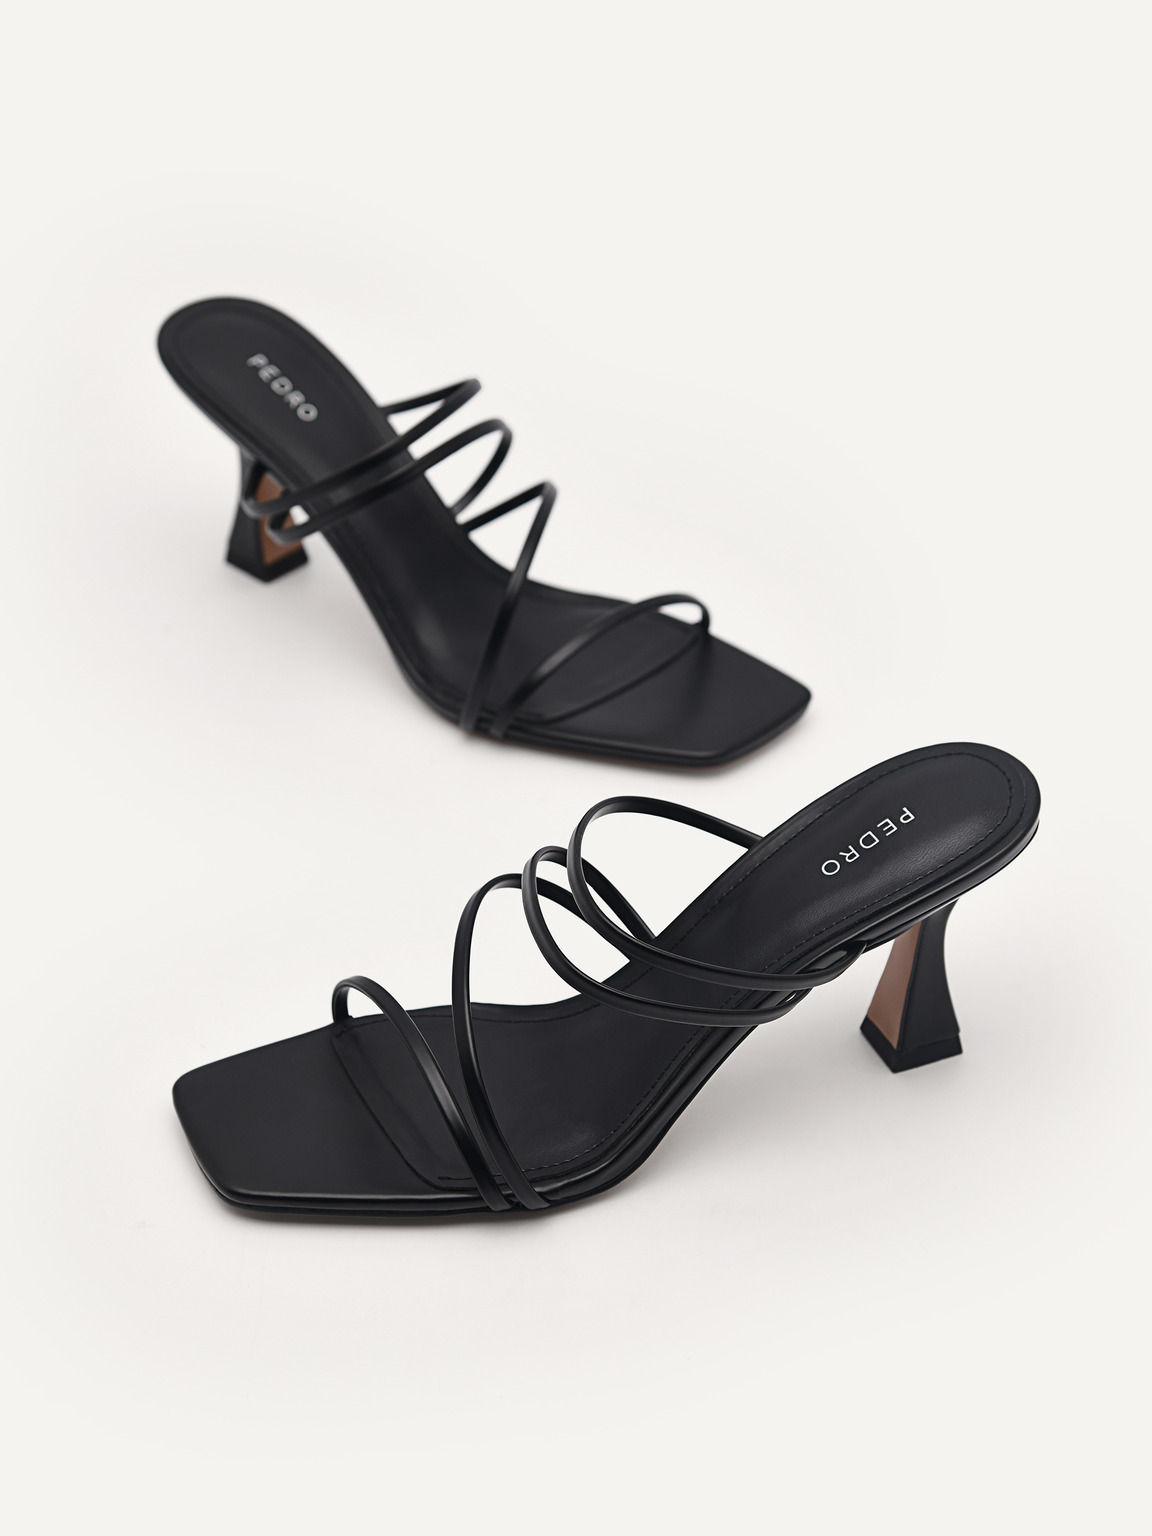 Strappy Heel Sandals - Black, Black